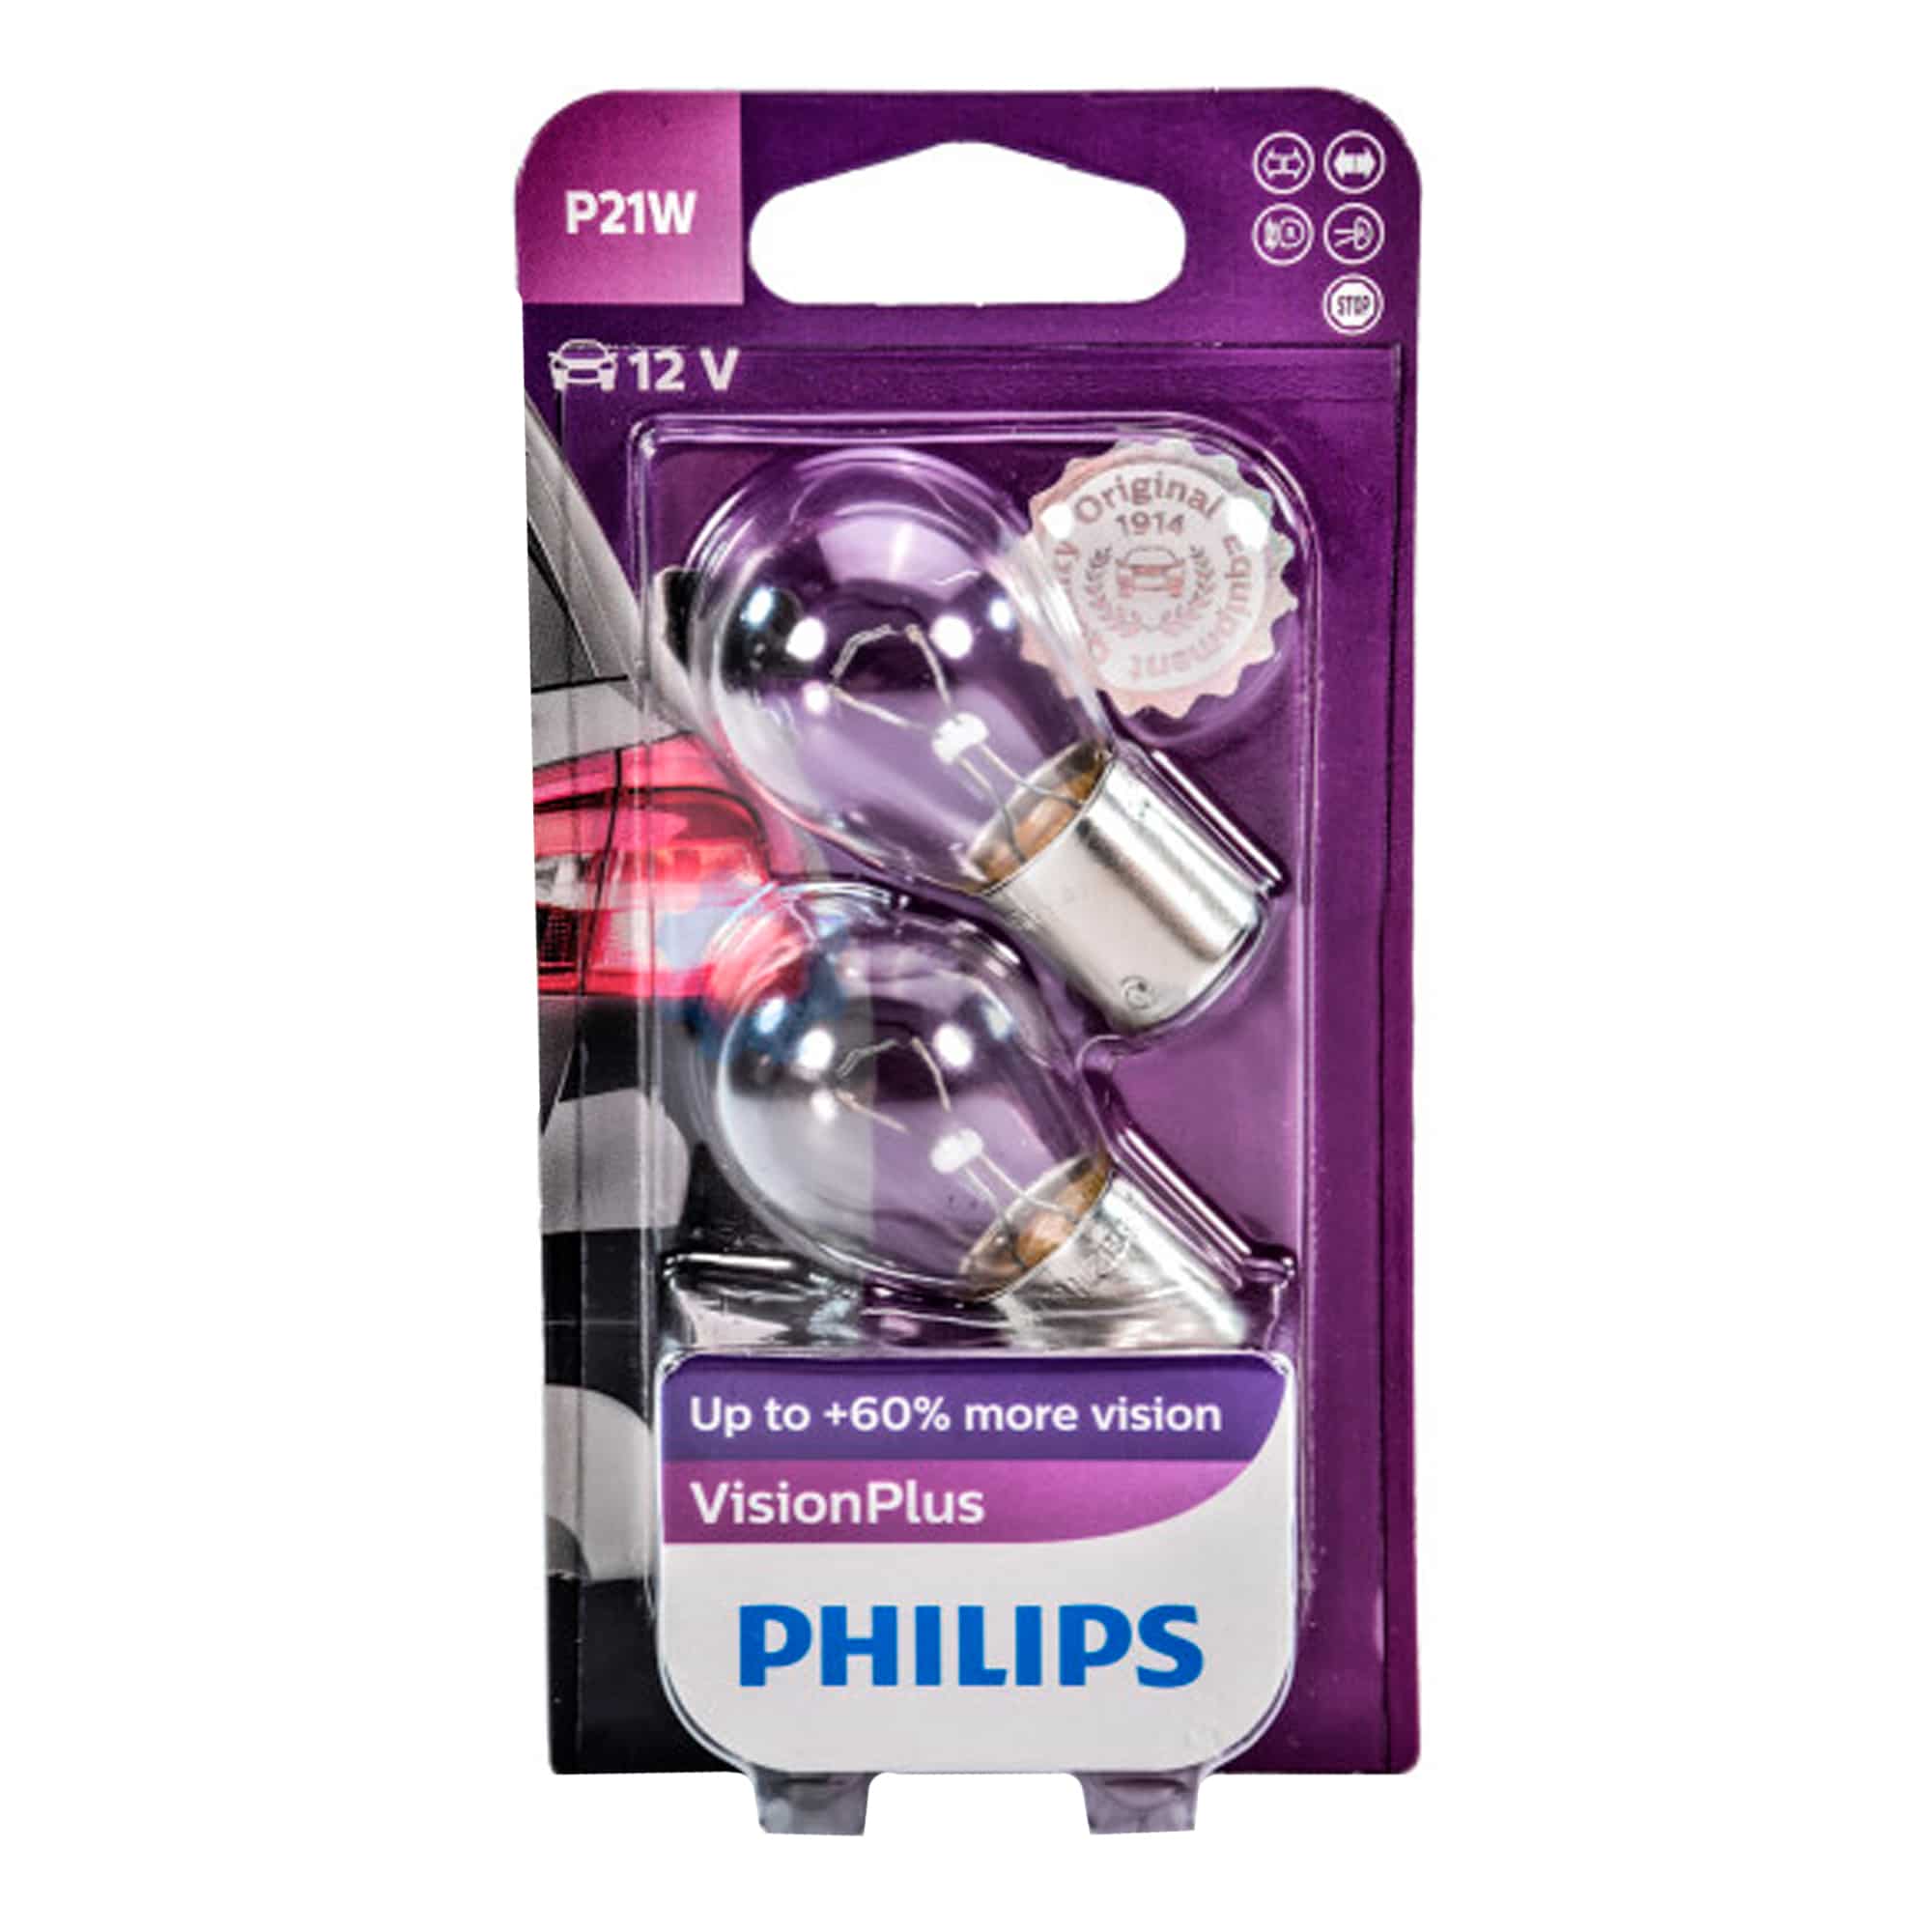 Лампа Philips VisionPlus P21W 12V 21W 12498VPB2